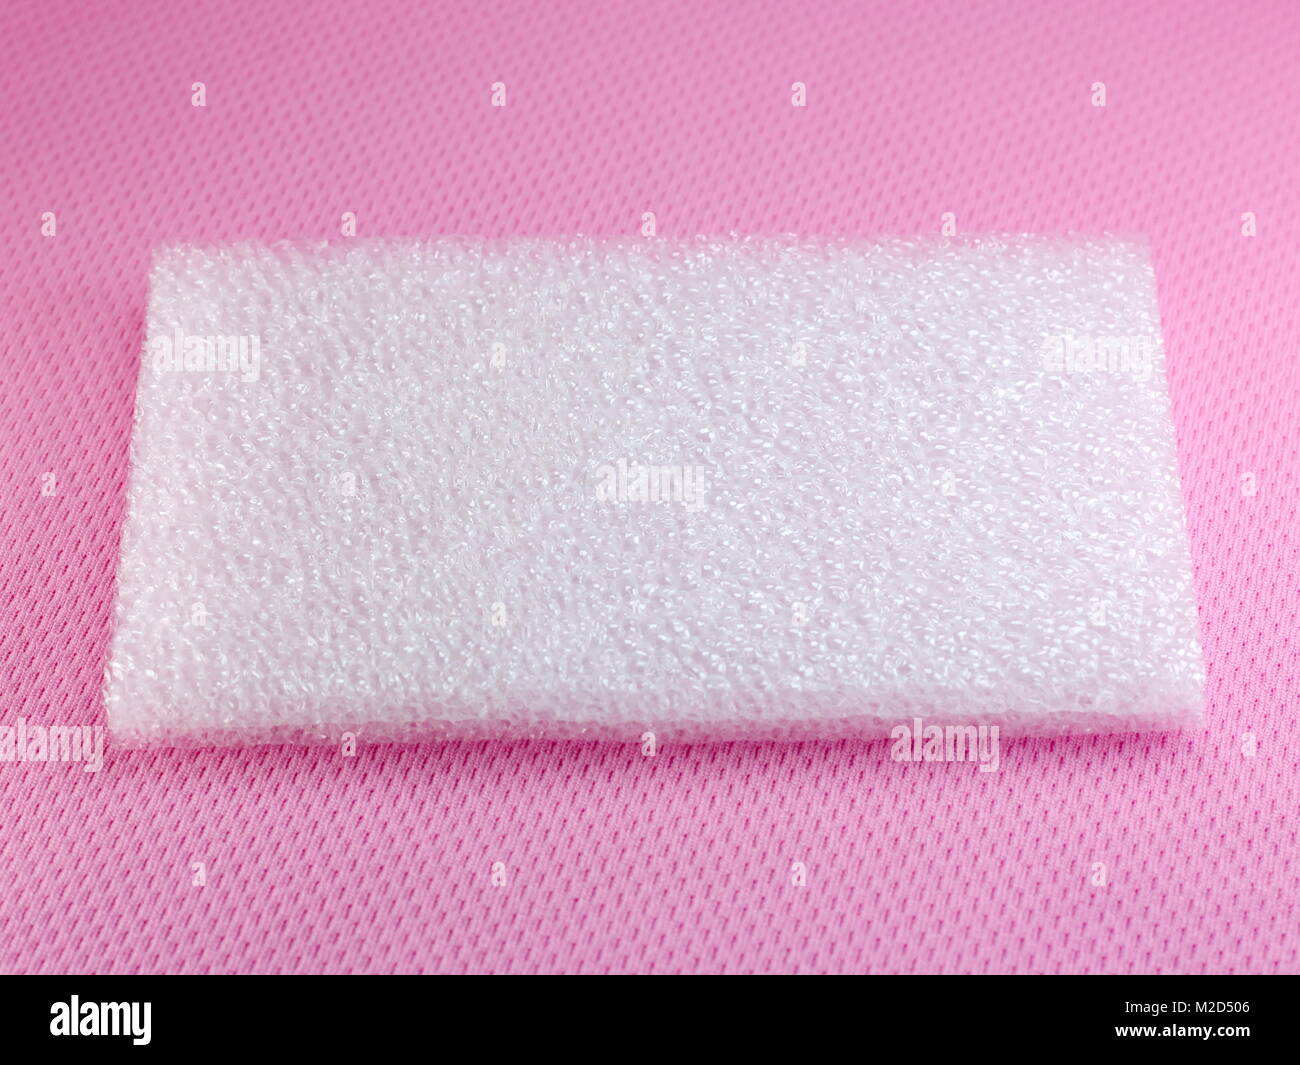 Shockproof material Polyethelene foam on pink background Stock Photo